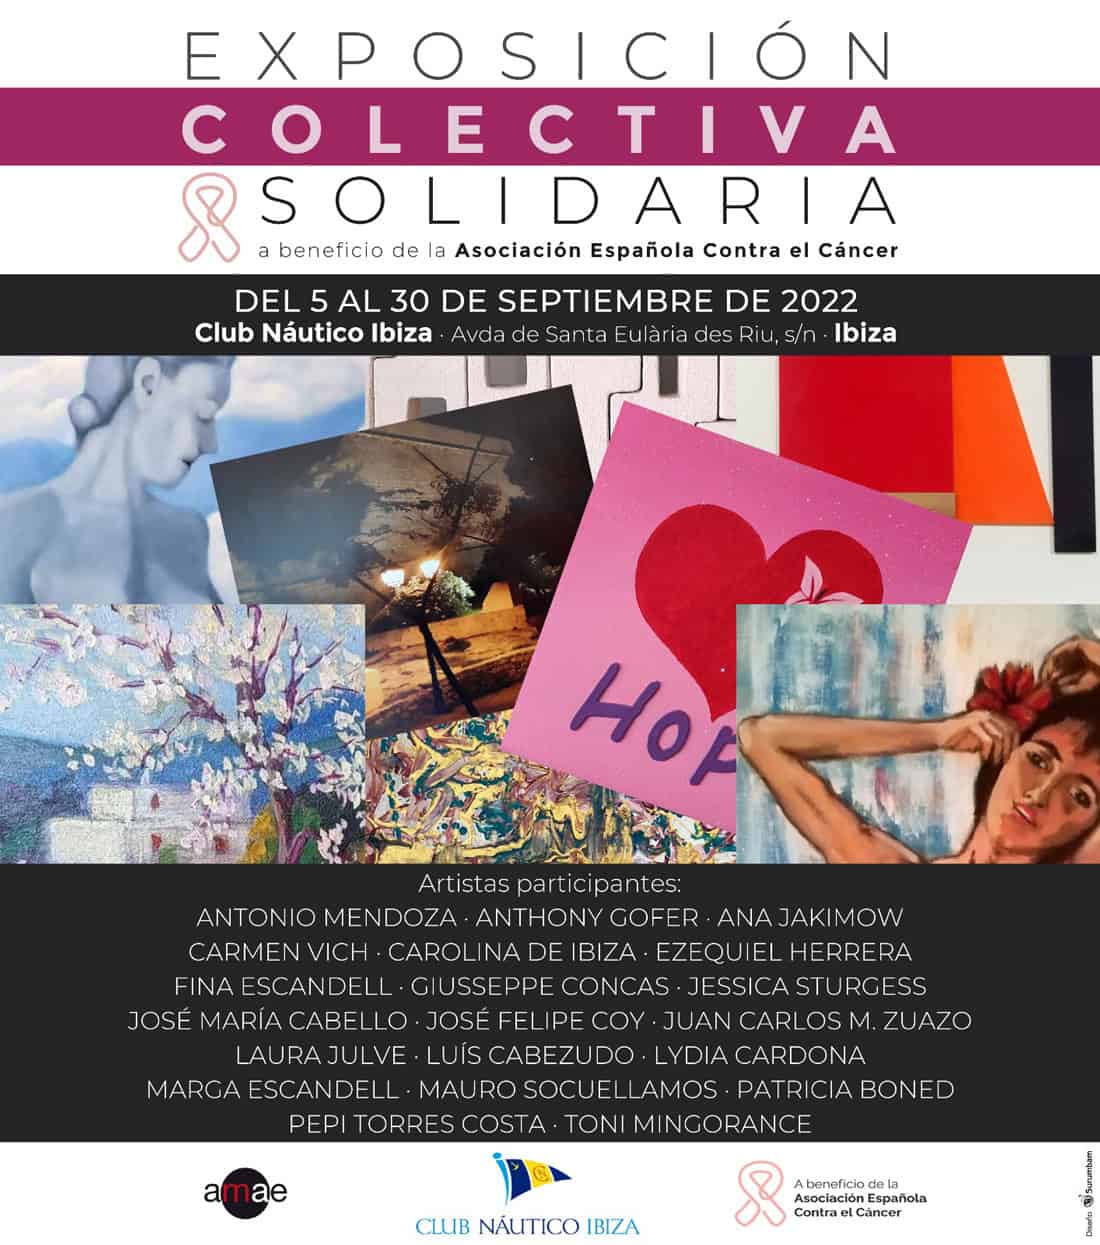 солидарность-коллектив-выставка-amae-club-nautico-ibiza-2022-welcometoibiza